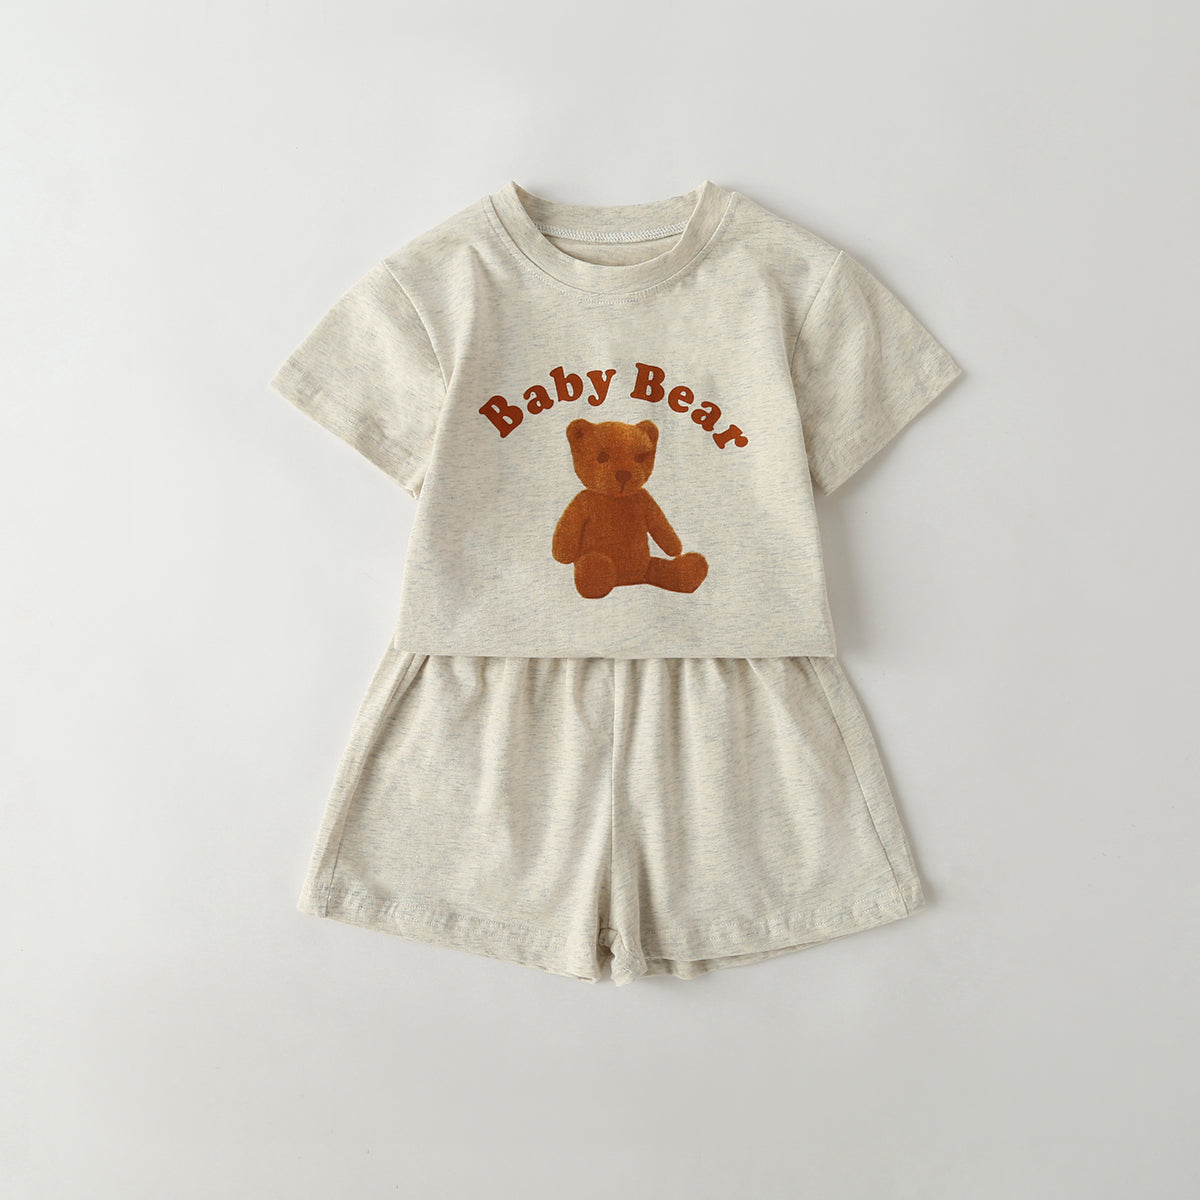 Baby Cartoon Animal & Slogan Pattern Short Sleeved Tee Combo Solid Shorts Sets My Kids-USA